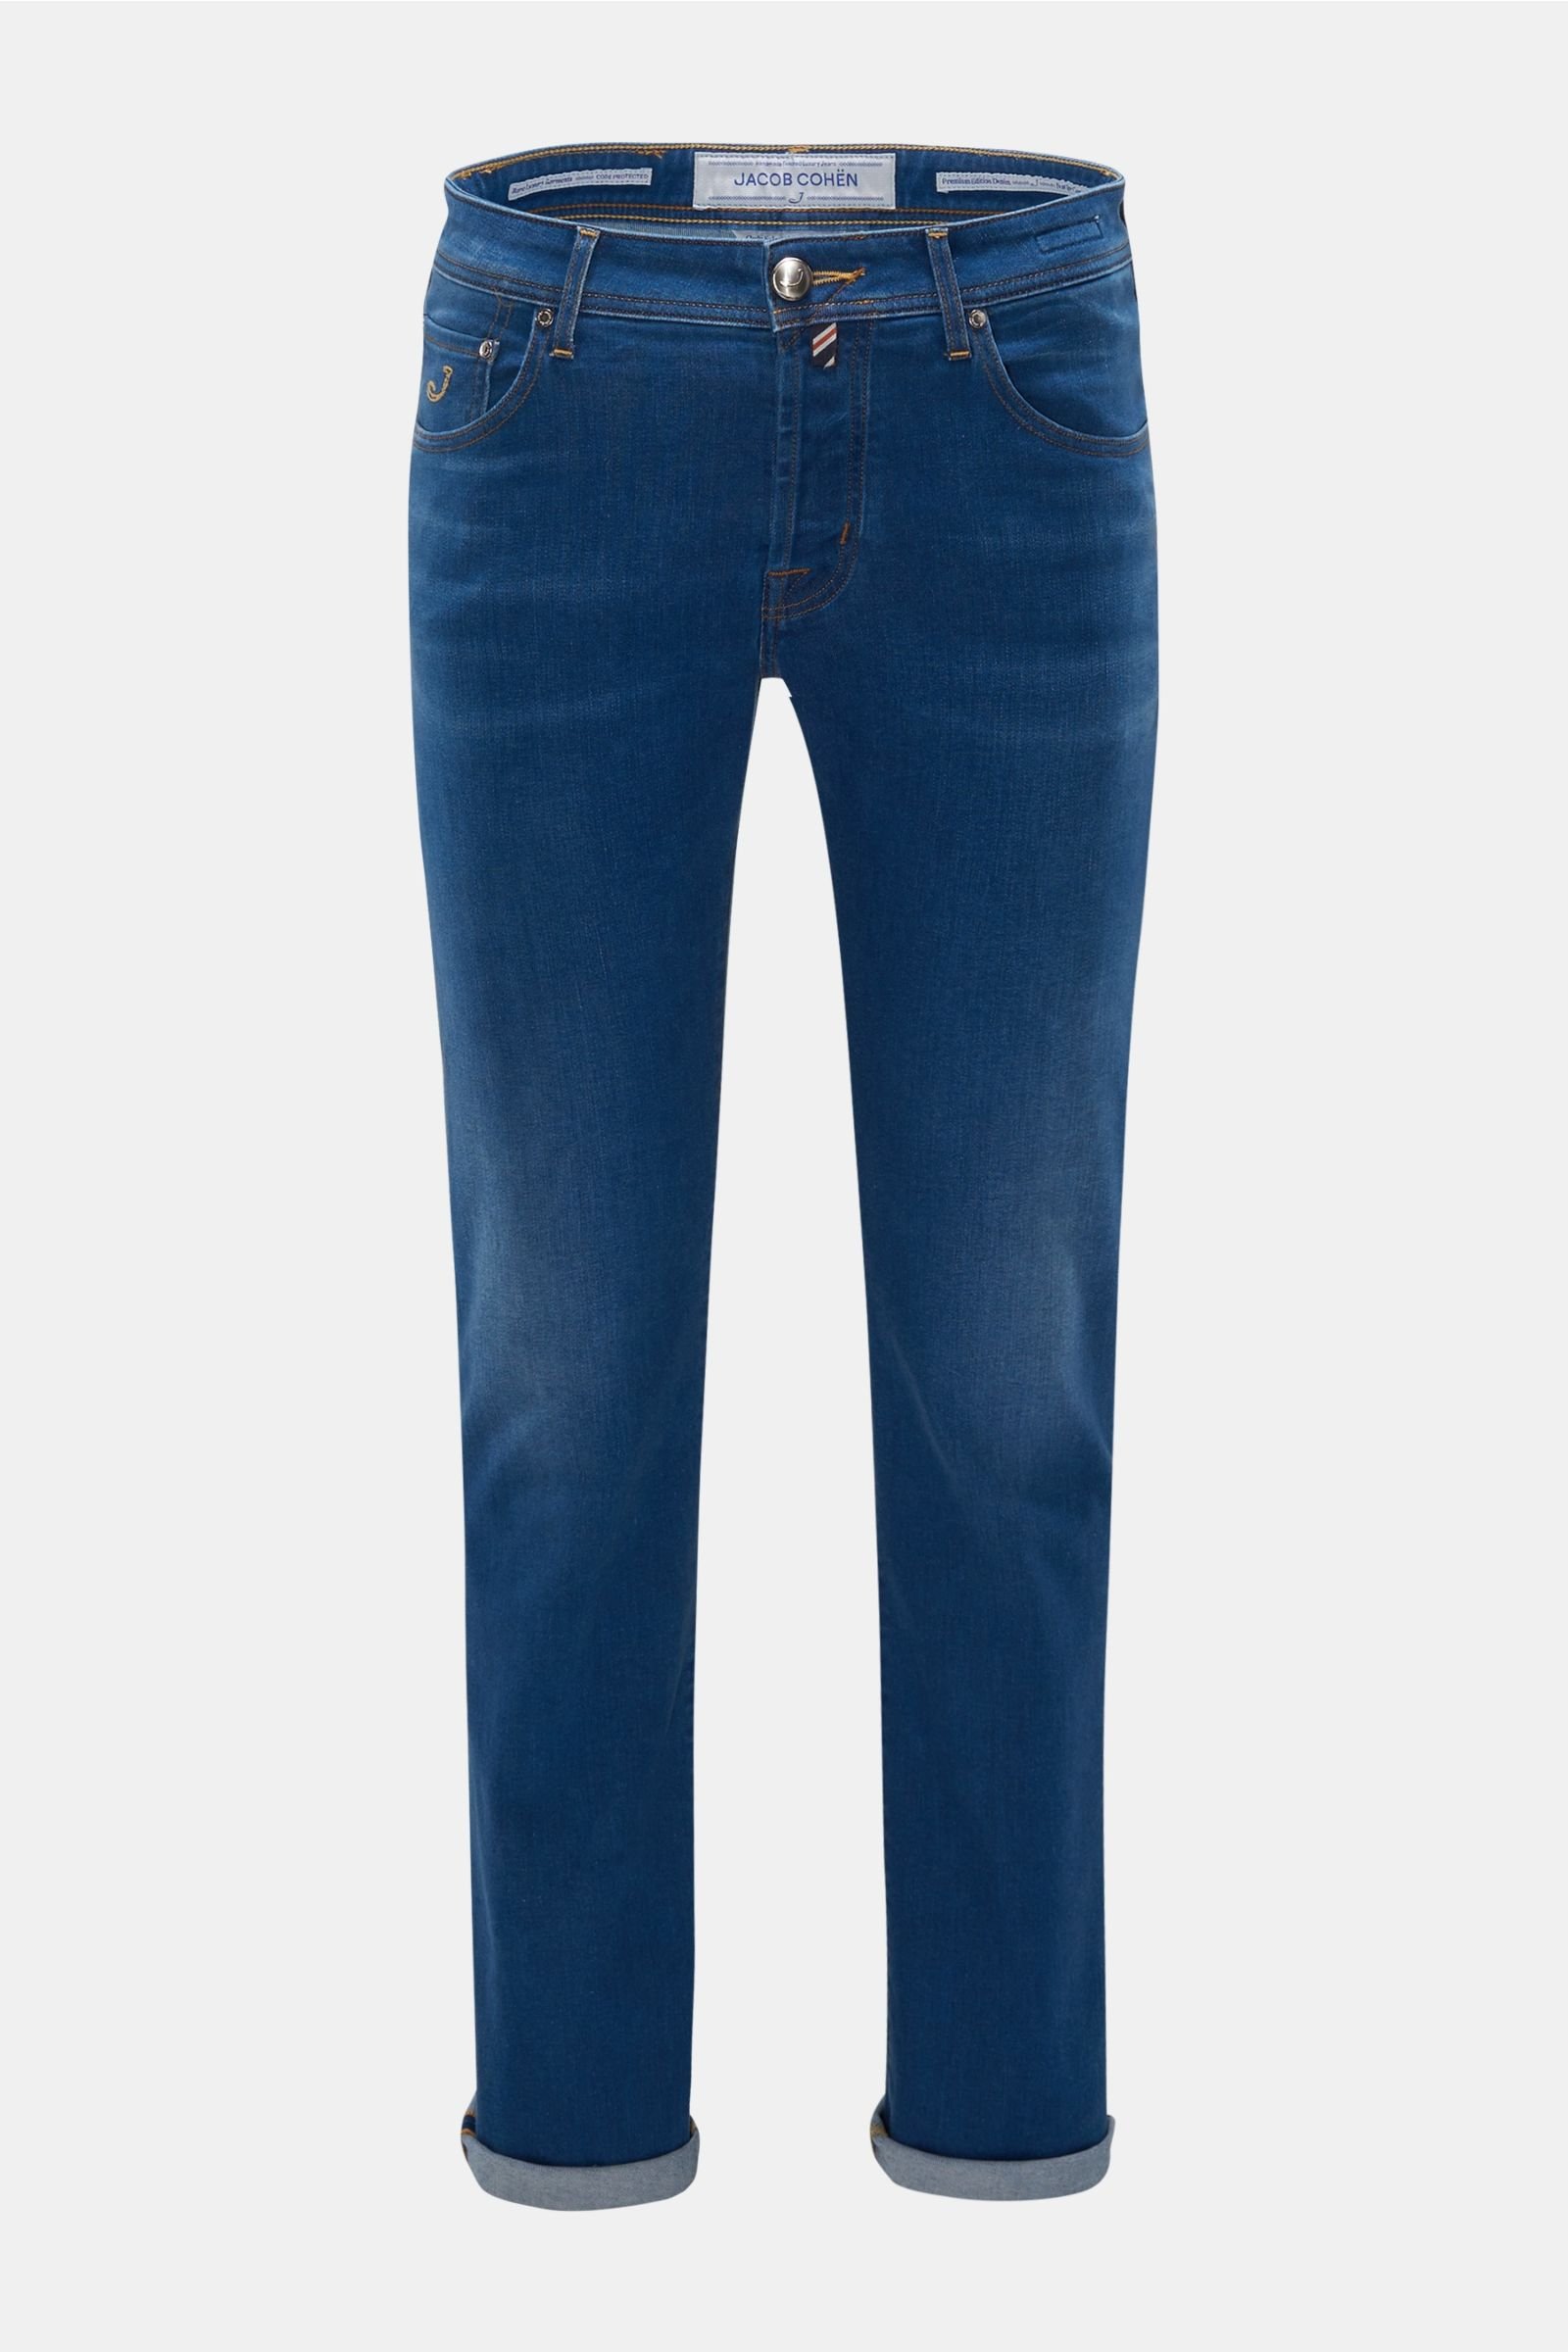 Jeans 'J620 Comfort Slim Fit' blau